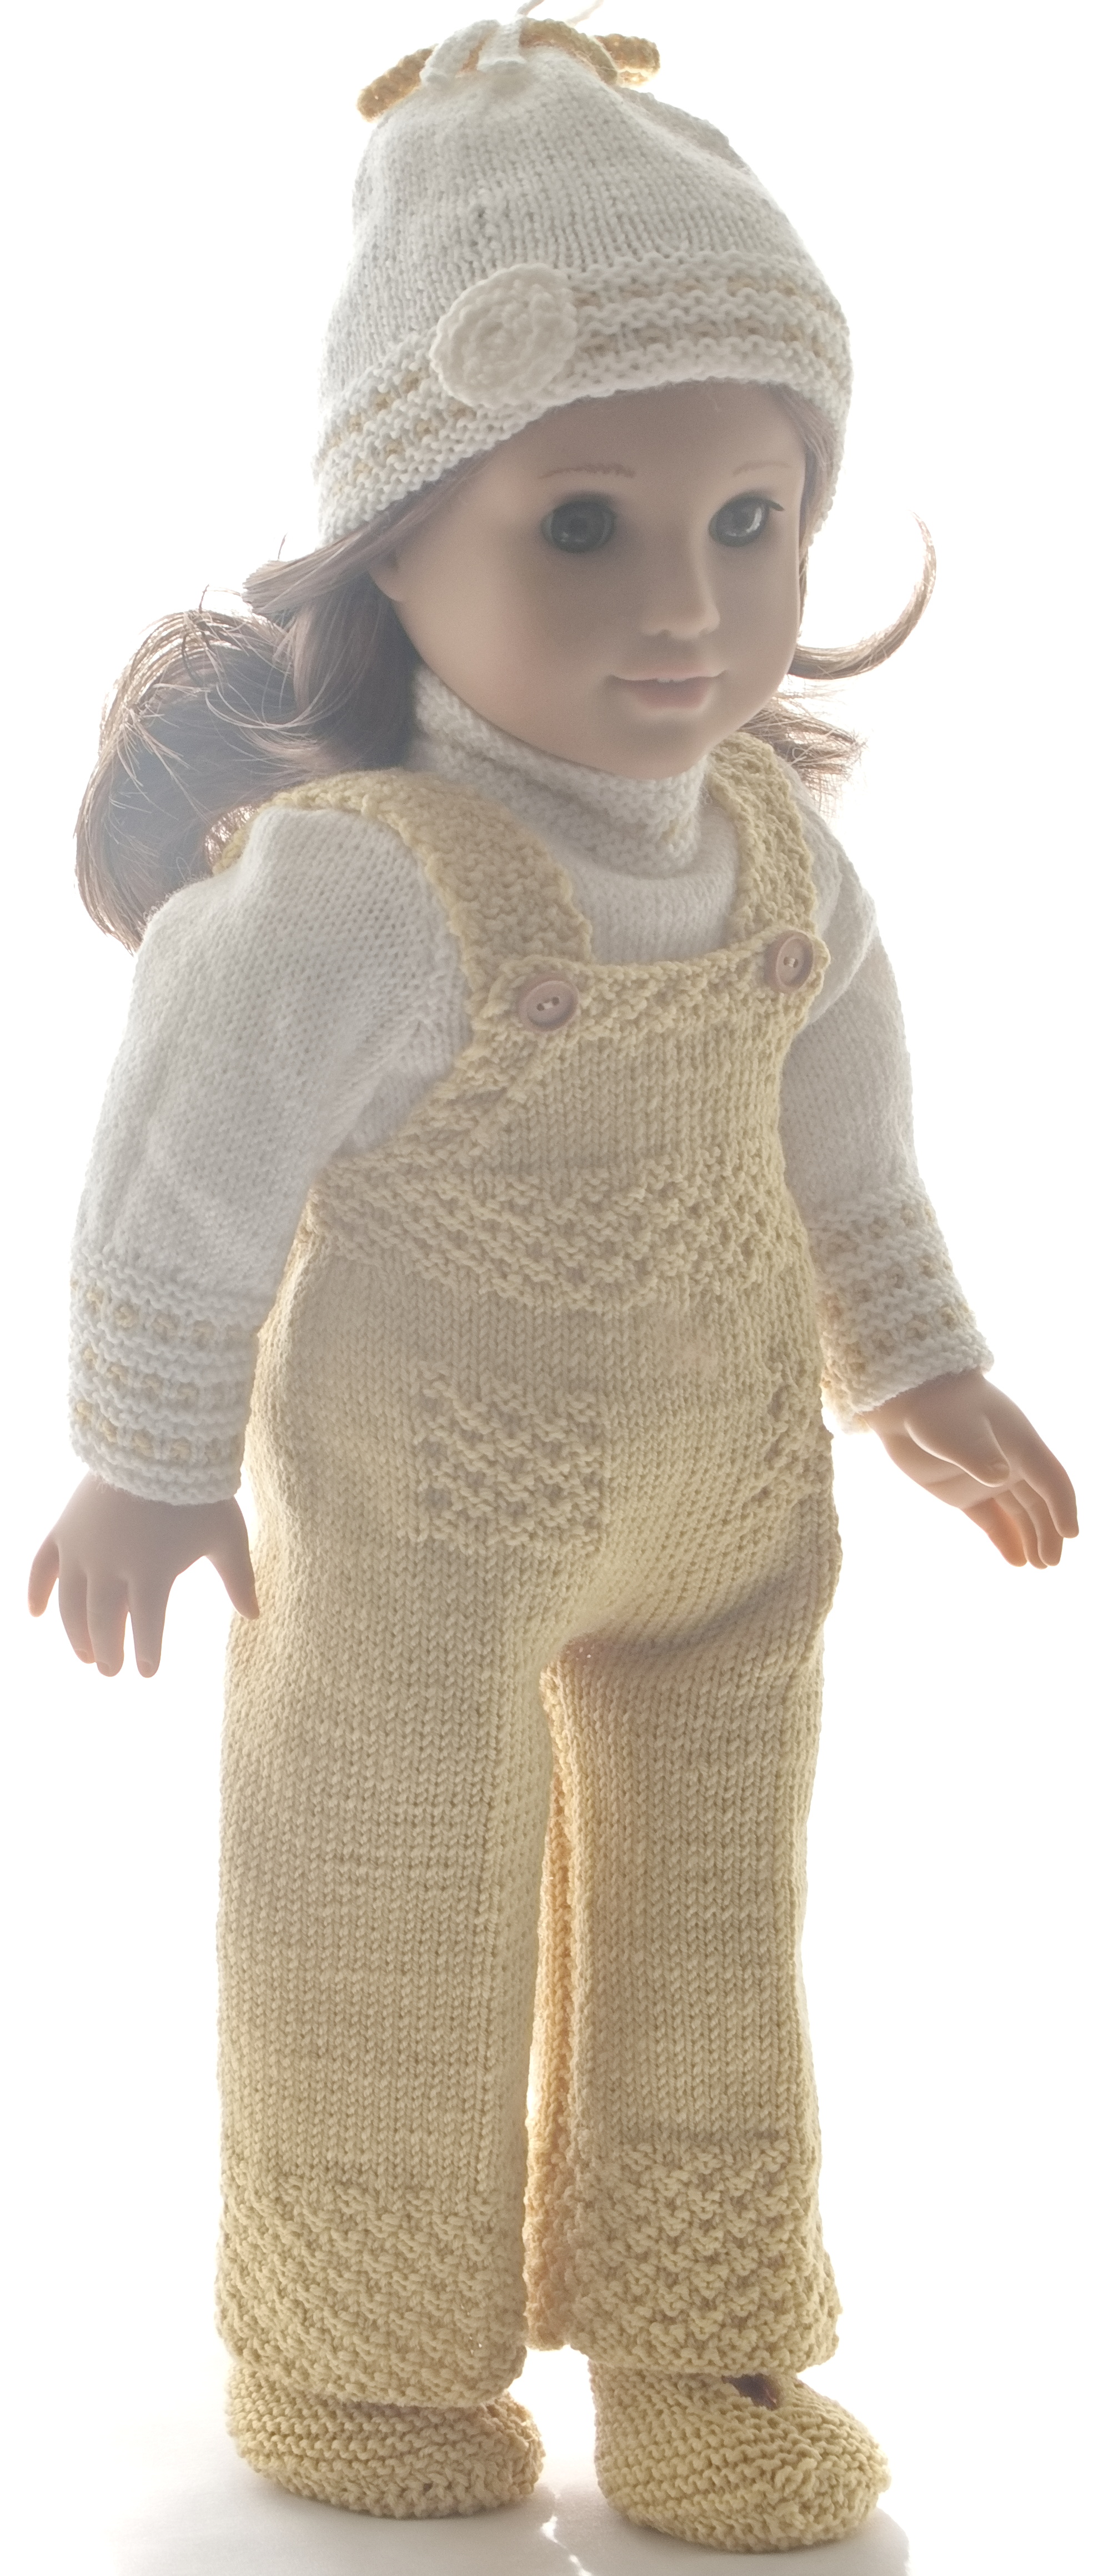 0243-02-knit-pattern-for-pants-18-doll.jpg